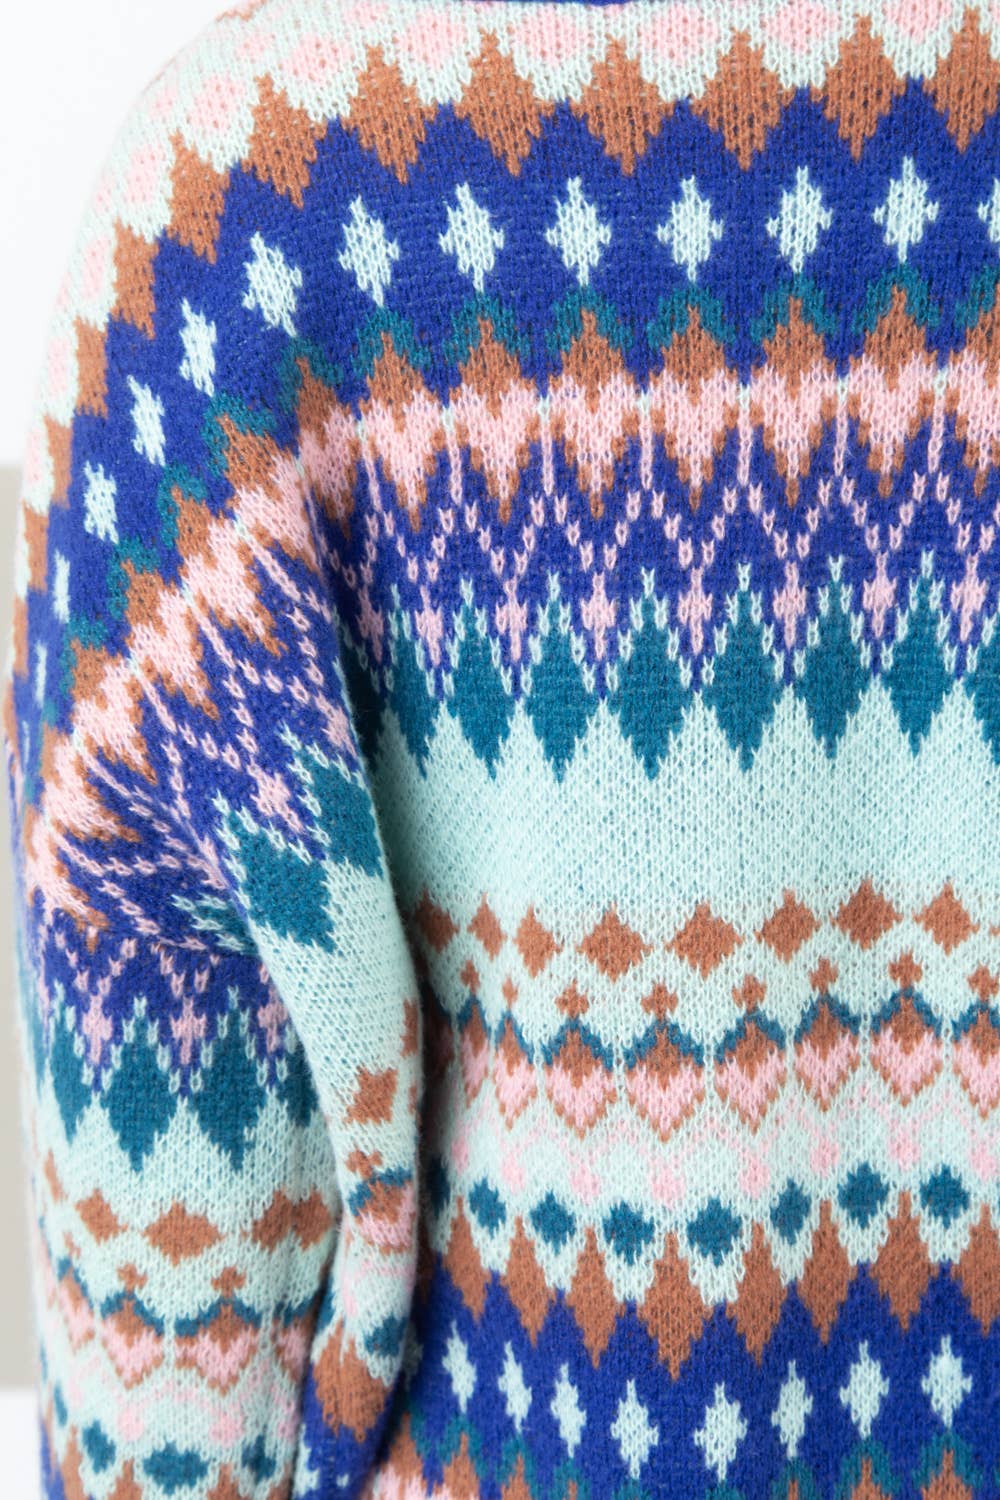 Blue Multi-Color Aztec Graphic Knit Sweater Cardigan